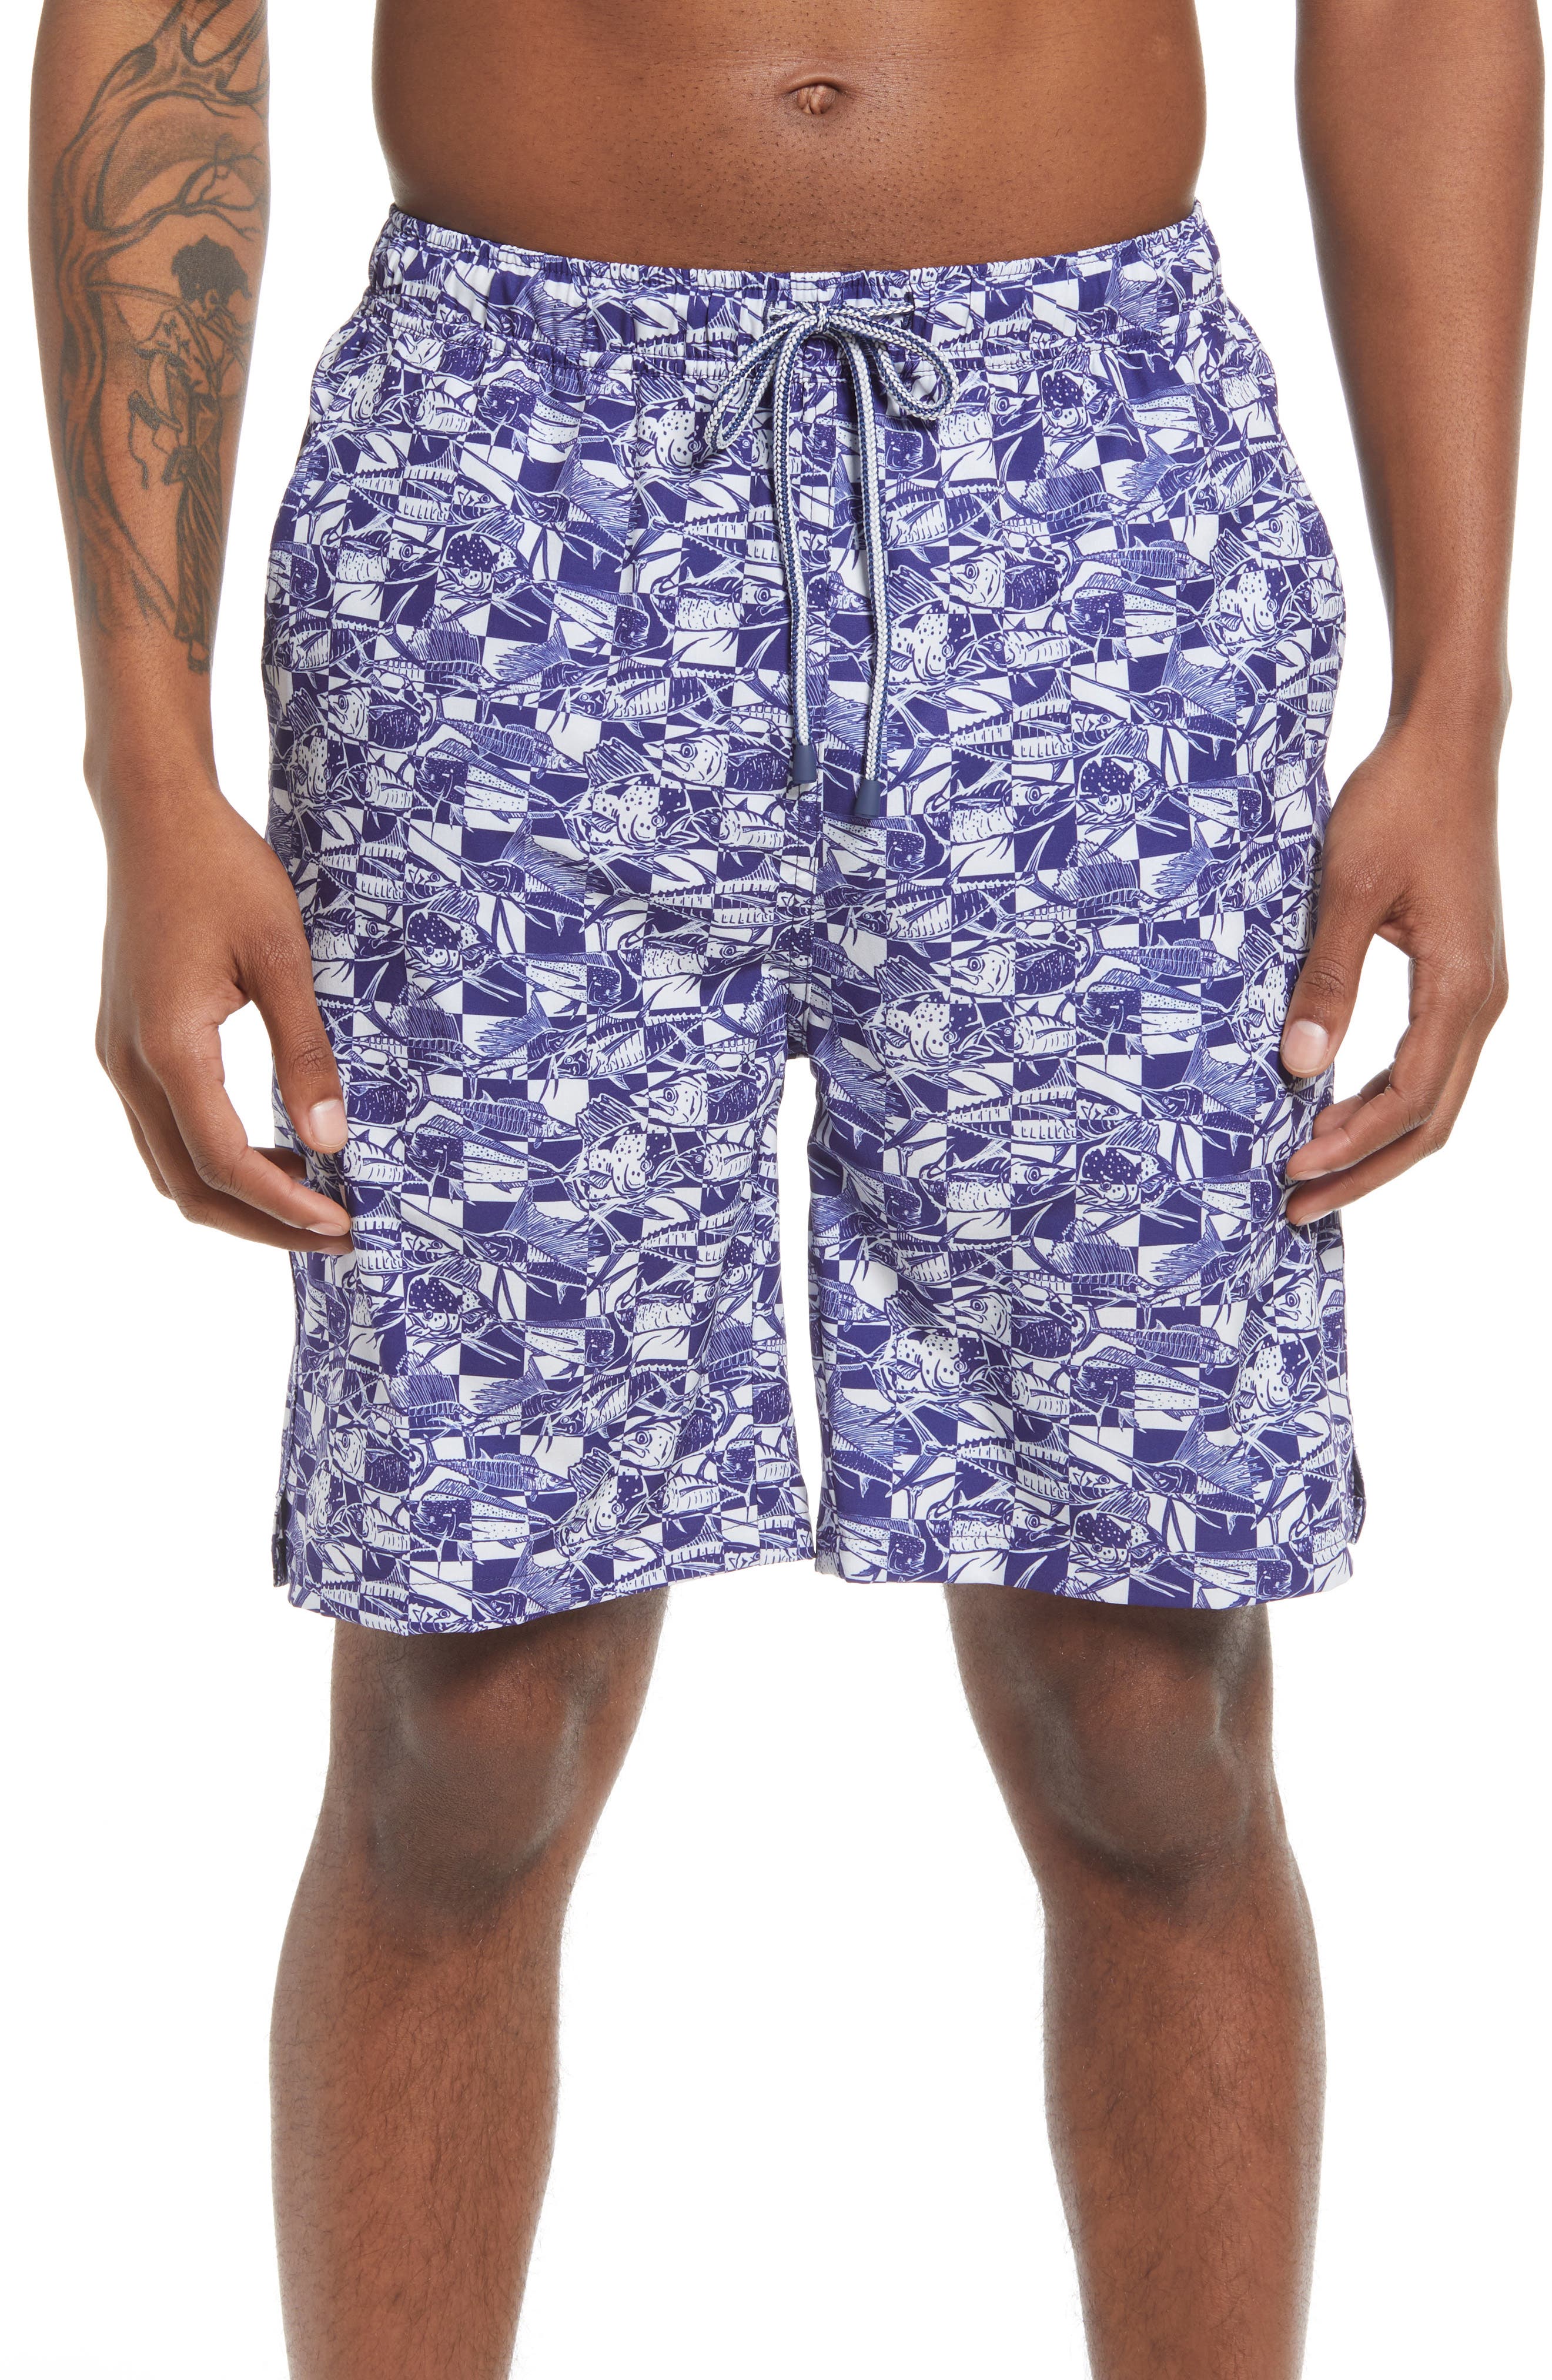 Mens Beach Swim Trunks Vintage Poppy Flowers Boxer Swimsuit Underwear Board Shorts with Pocket